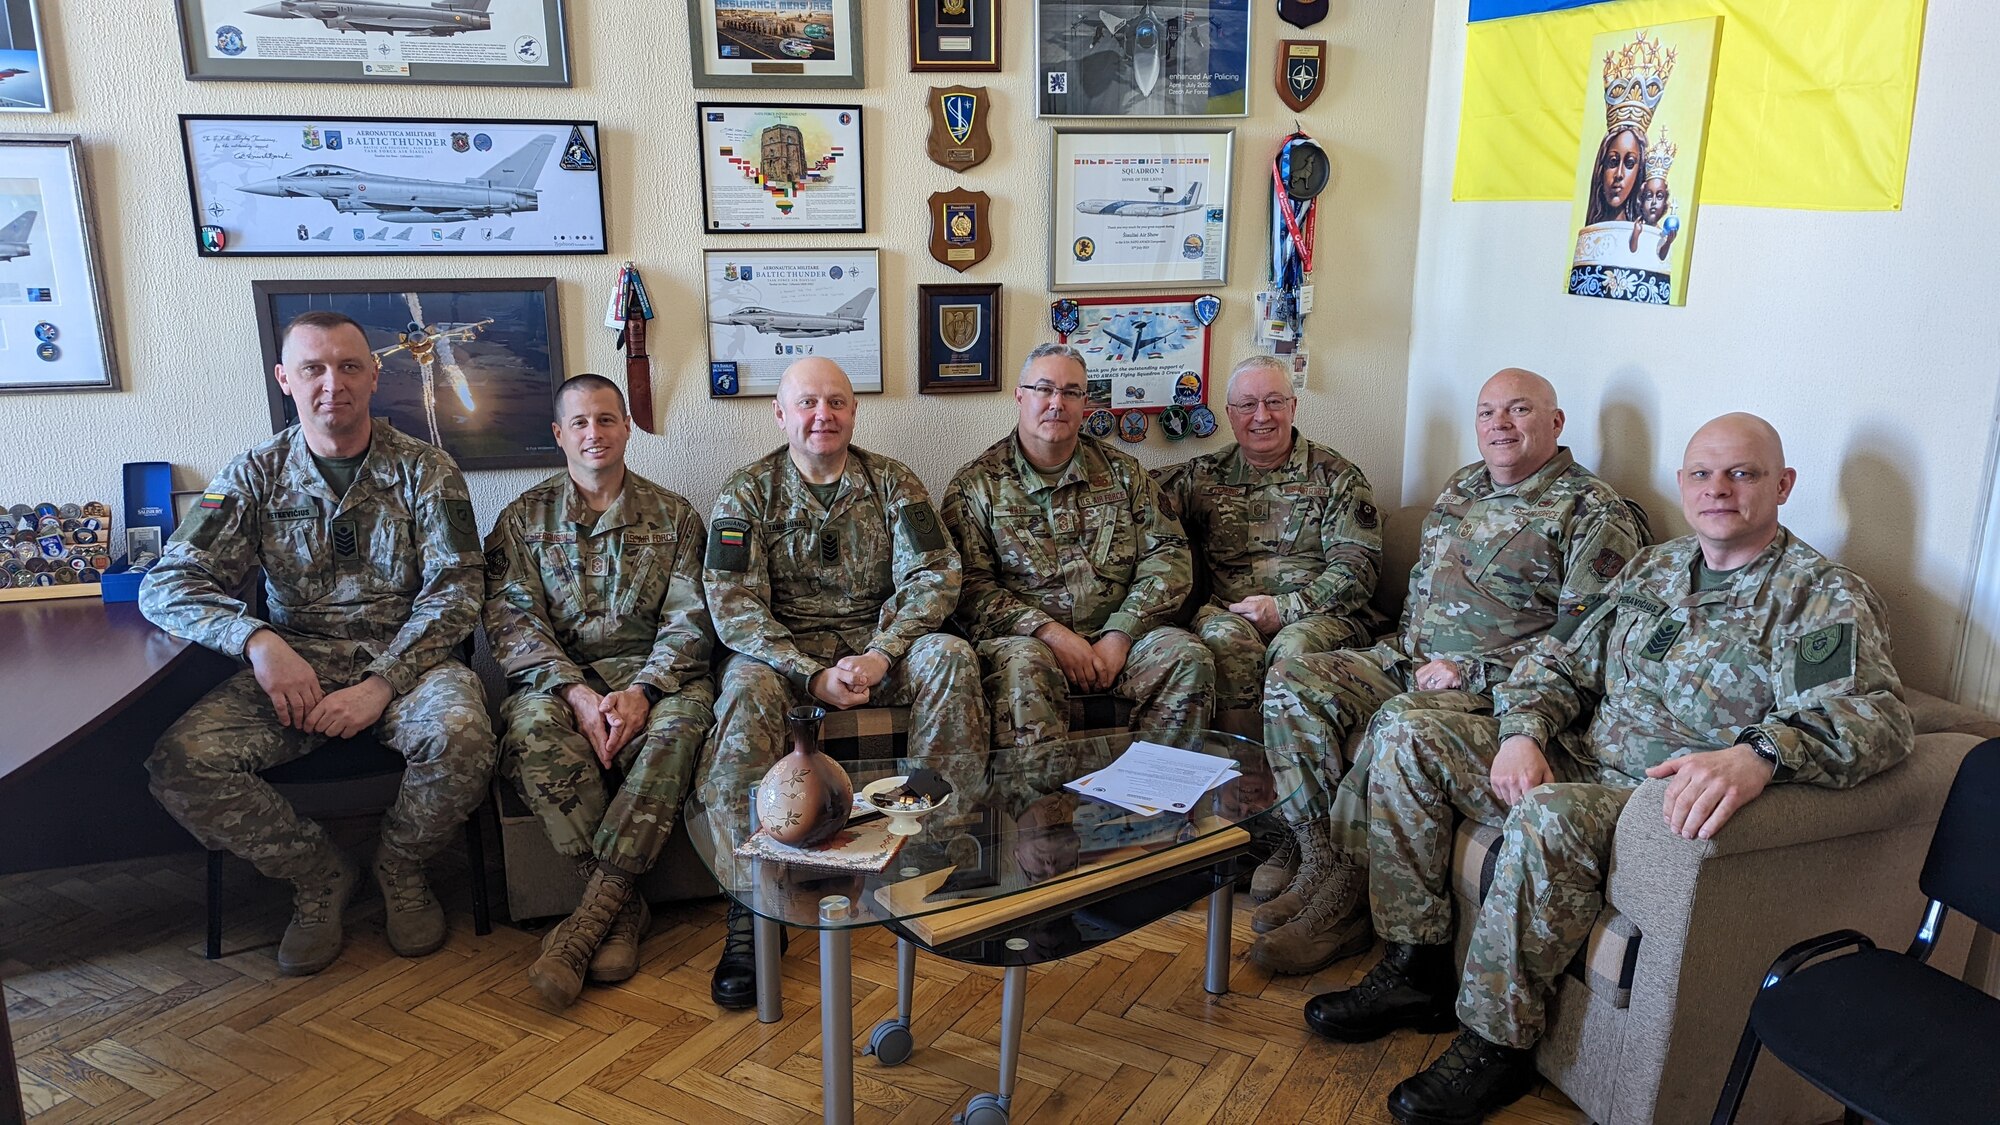 Military men in uniform sitting together.